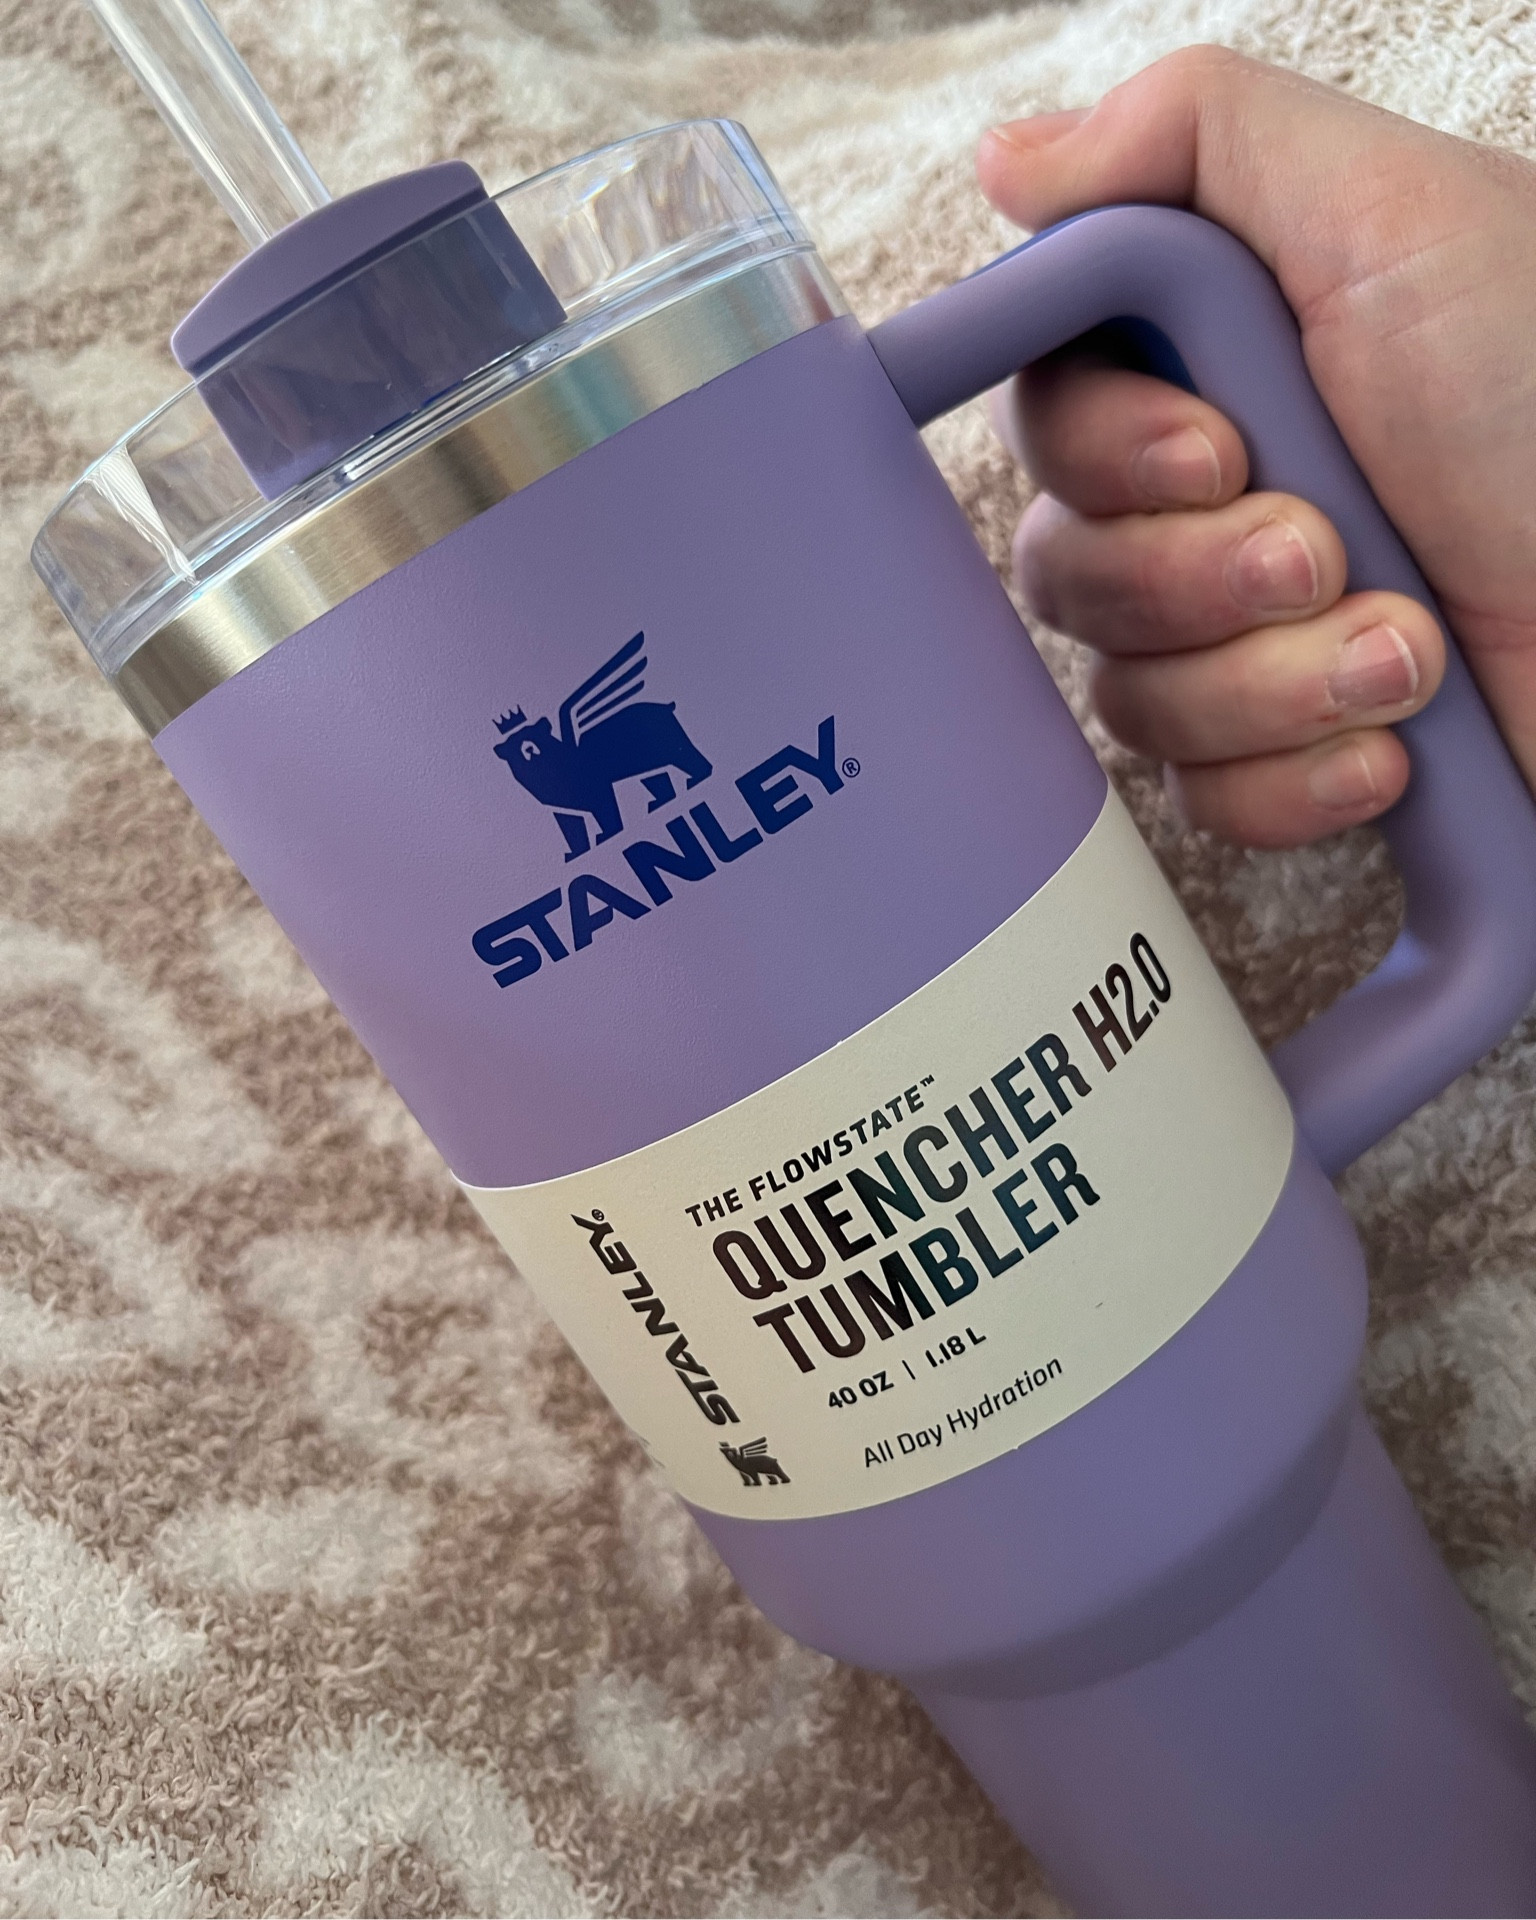 Stanley Adventure Quencher H2.0 Flowstate 40 oz Tumbler - Lavender